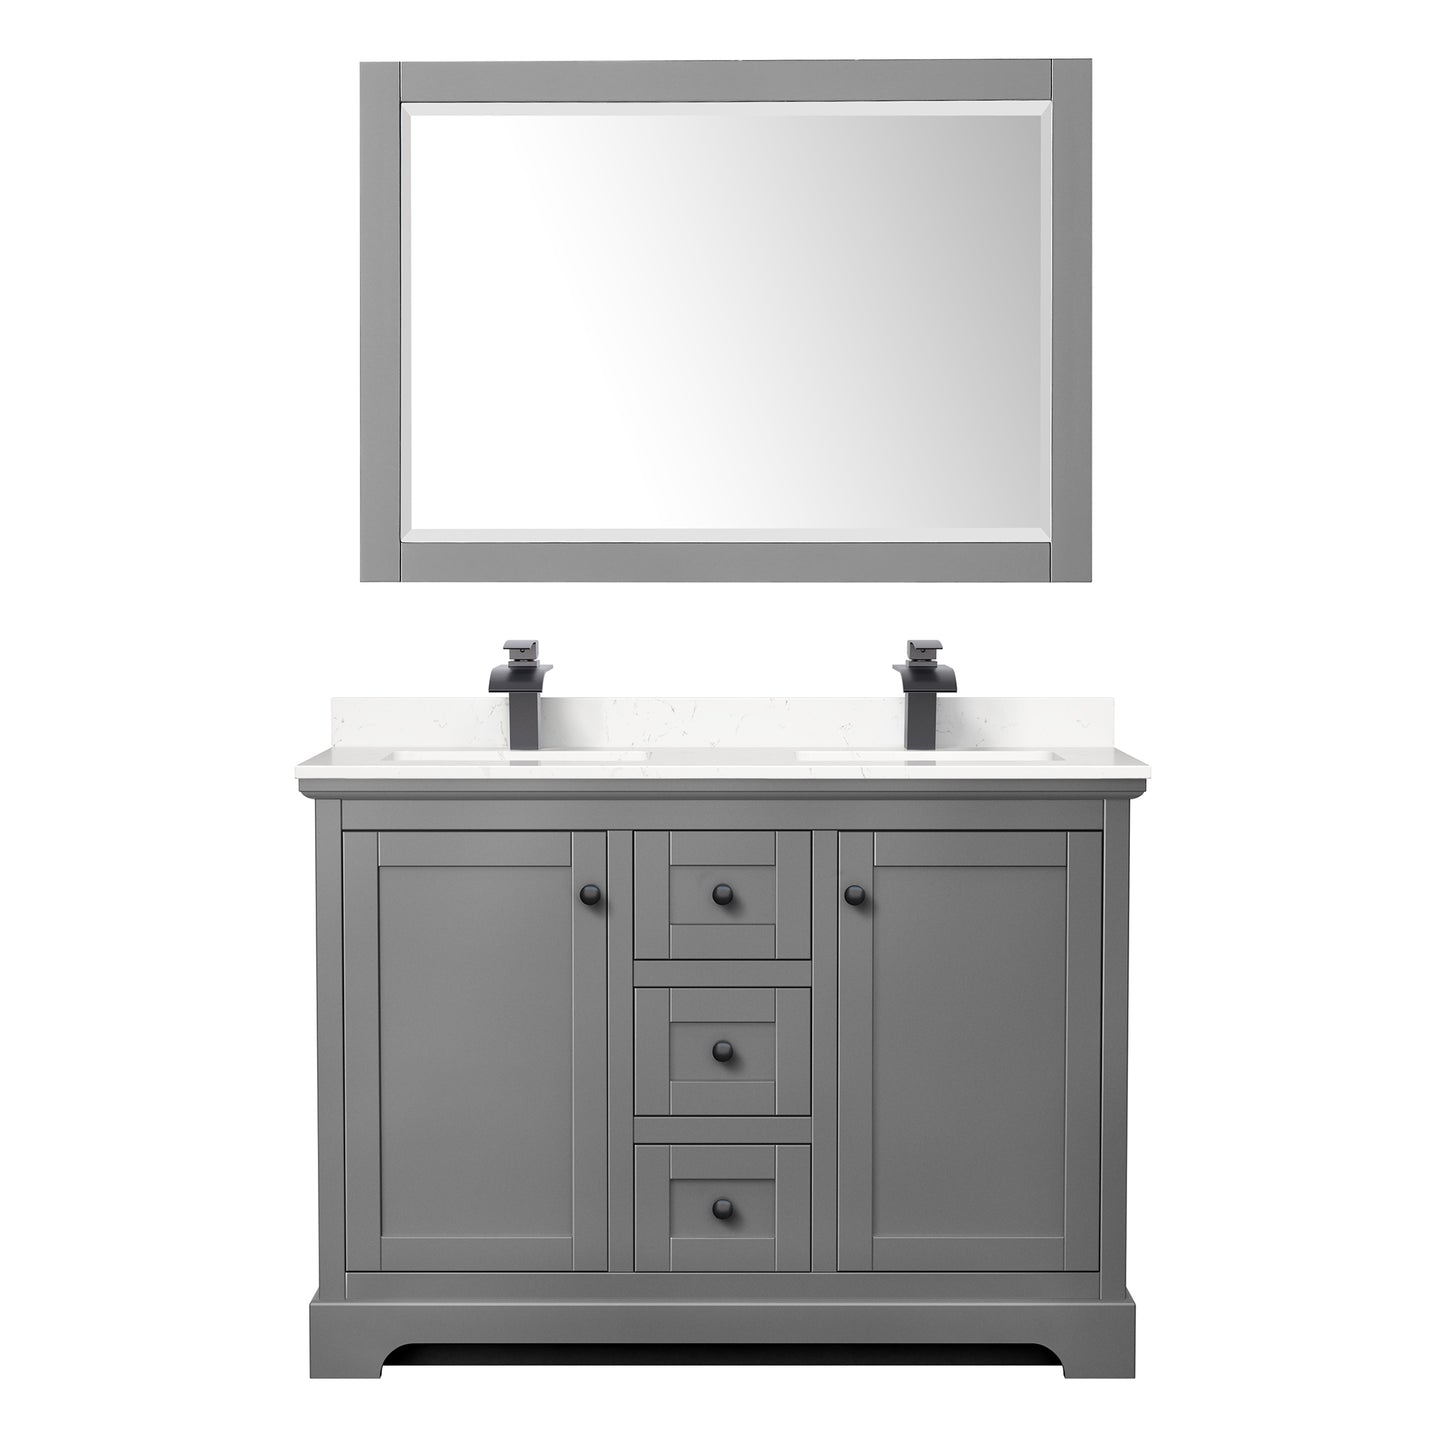 Wyndham Avery 48 Inch Double Bathroom Vanity Light-Vein Carrara Cultured Marble Countertop, Undermount Square Sinks in Matte Black Trim with 46 Inch Mirror - Luxe Bathroom Vanities